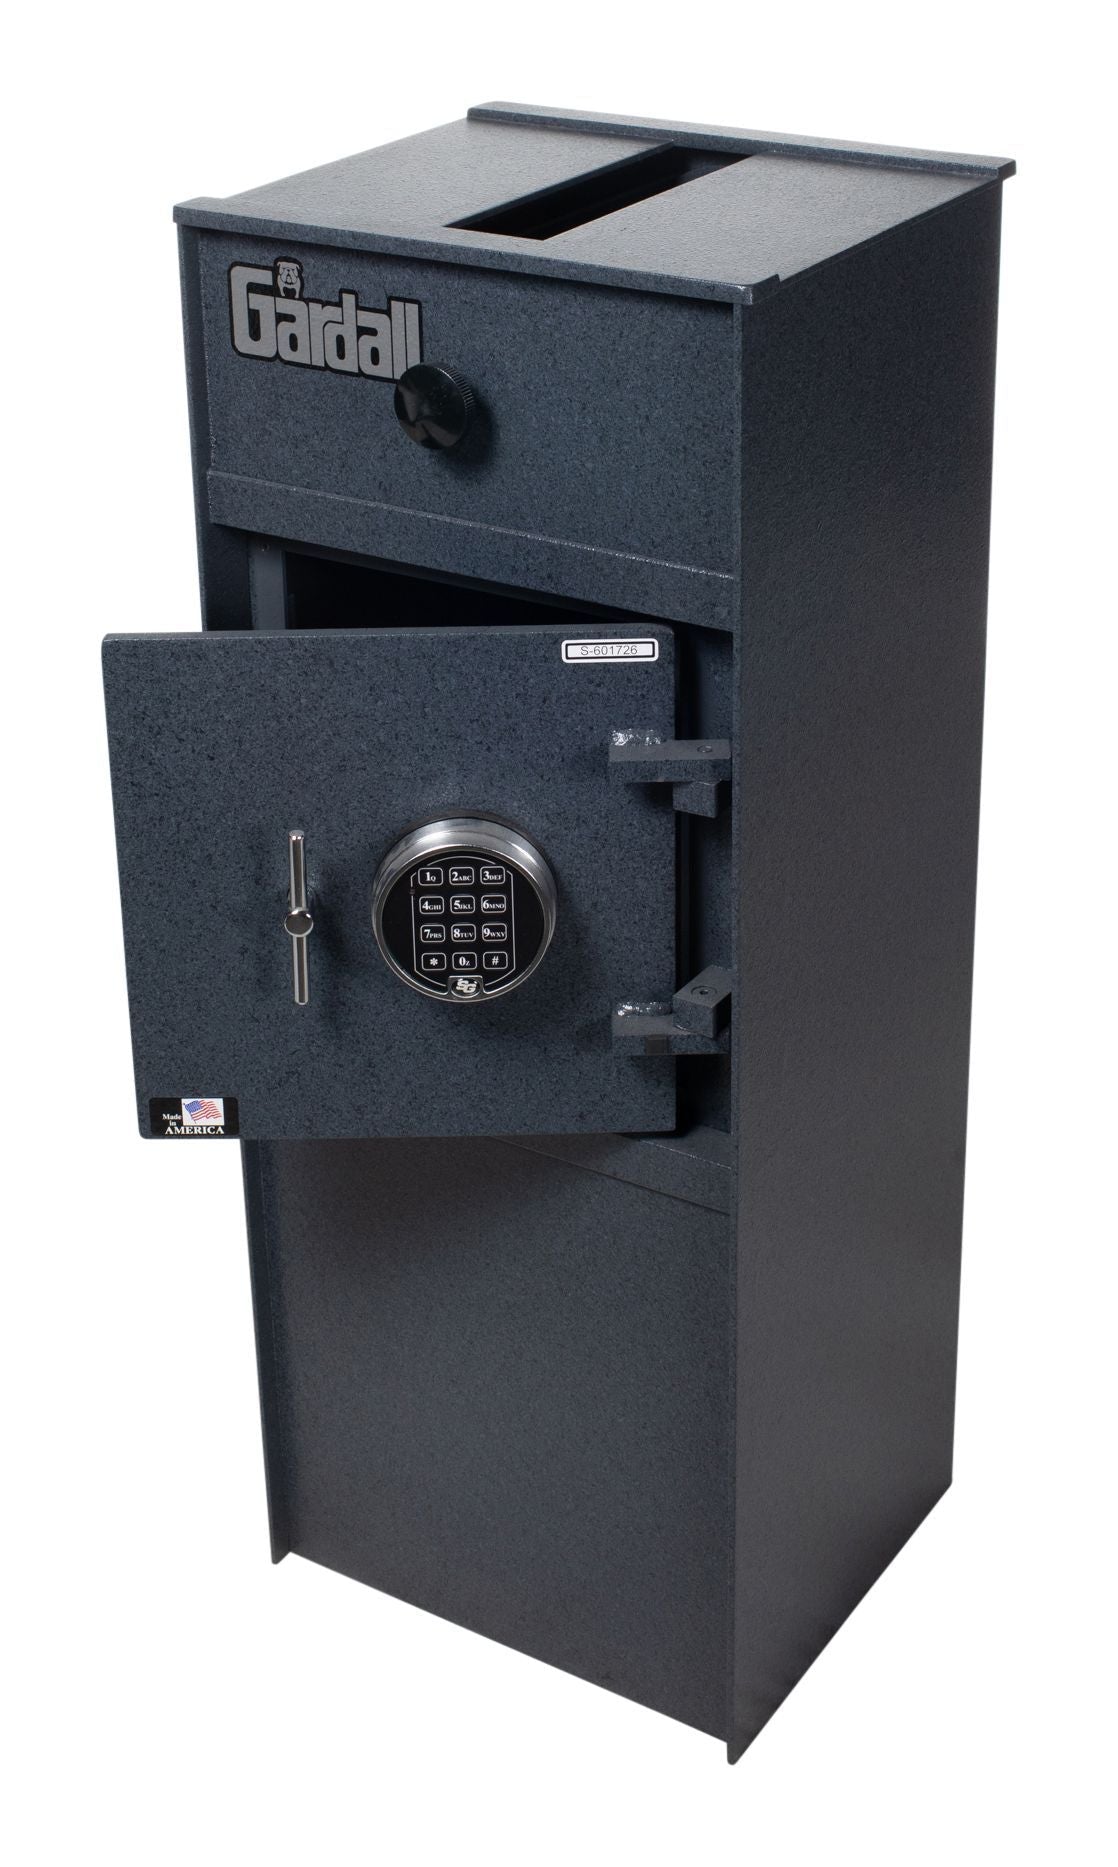 Gardall RC1237SD Single Door Depository Safe